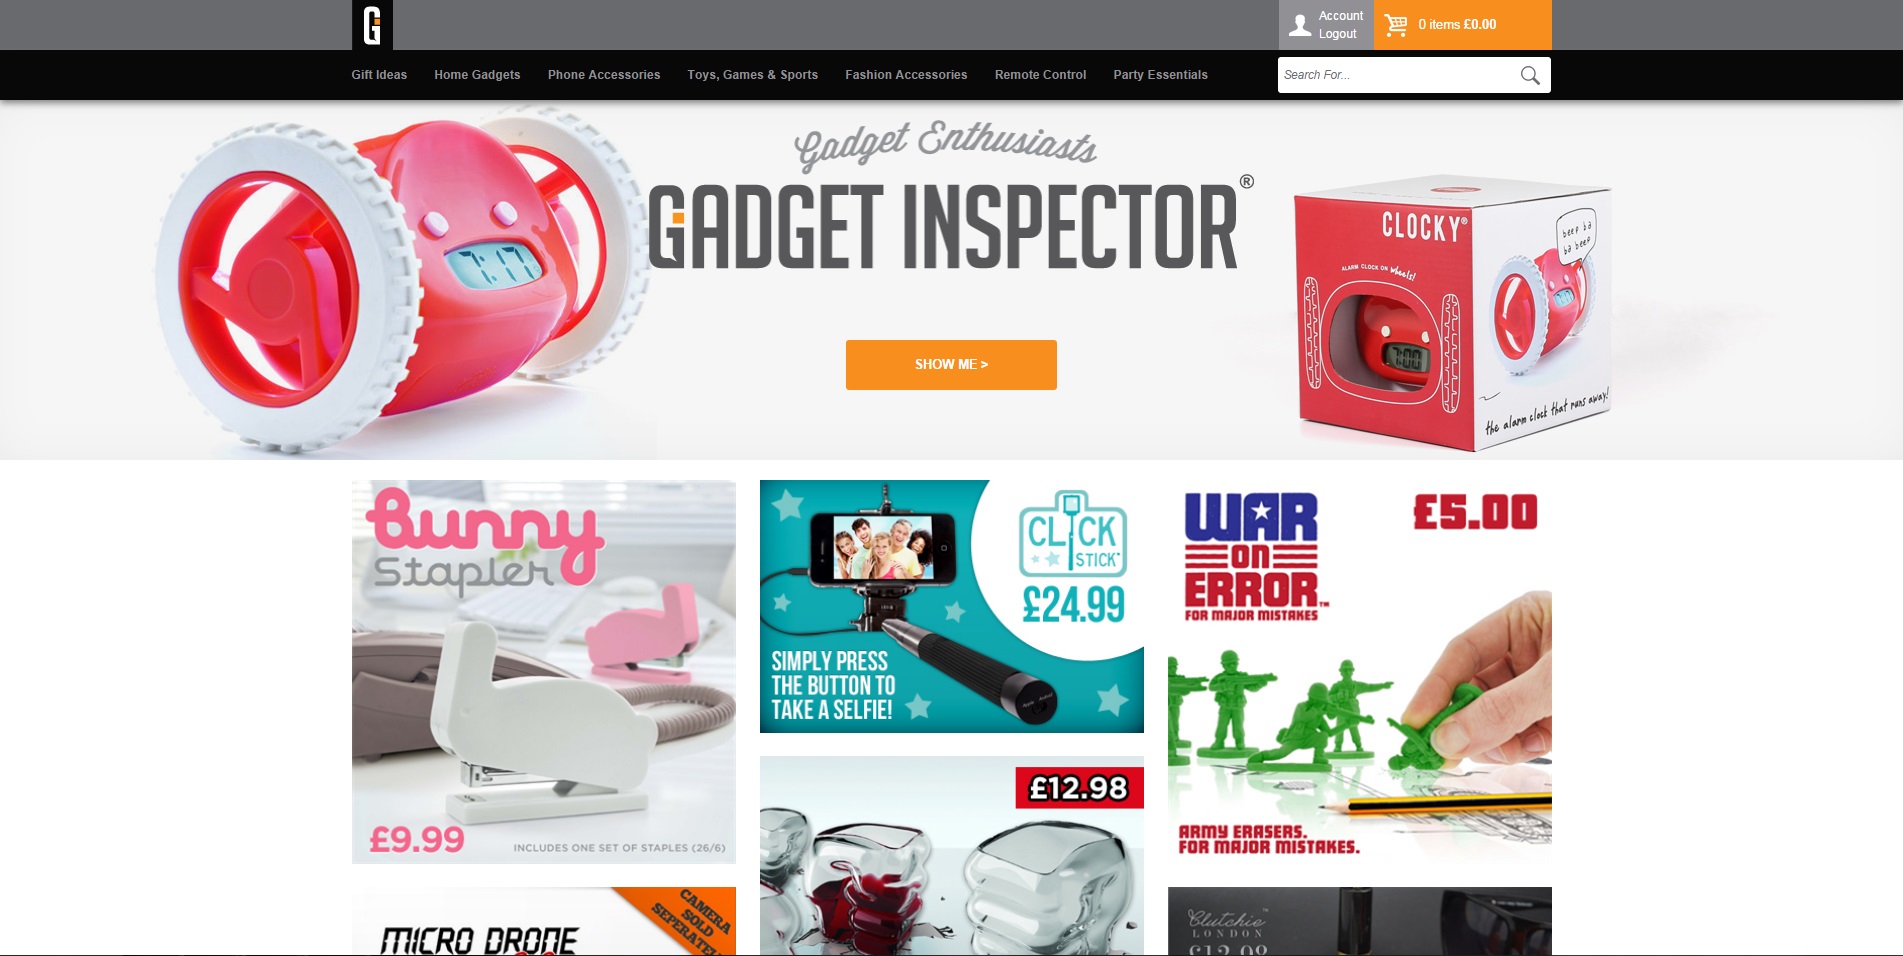 New Gadget Inspector site